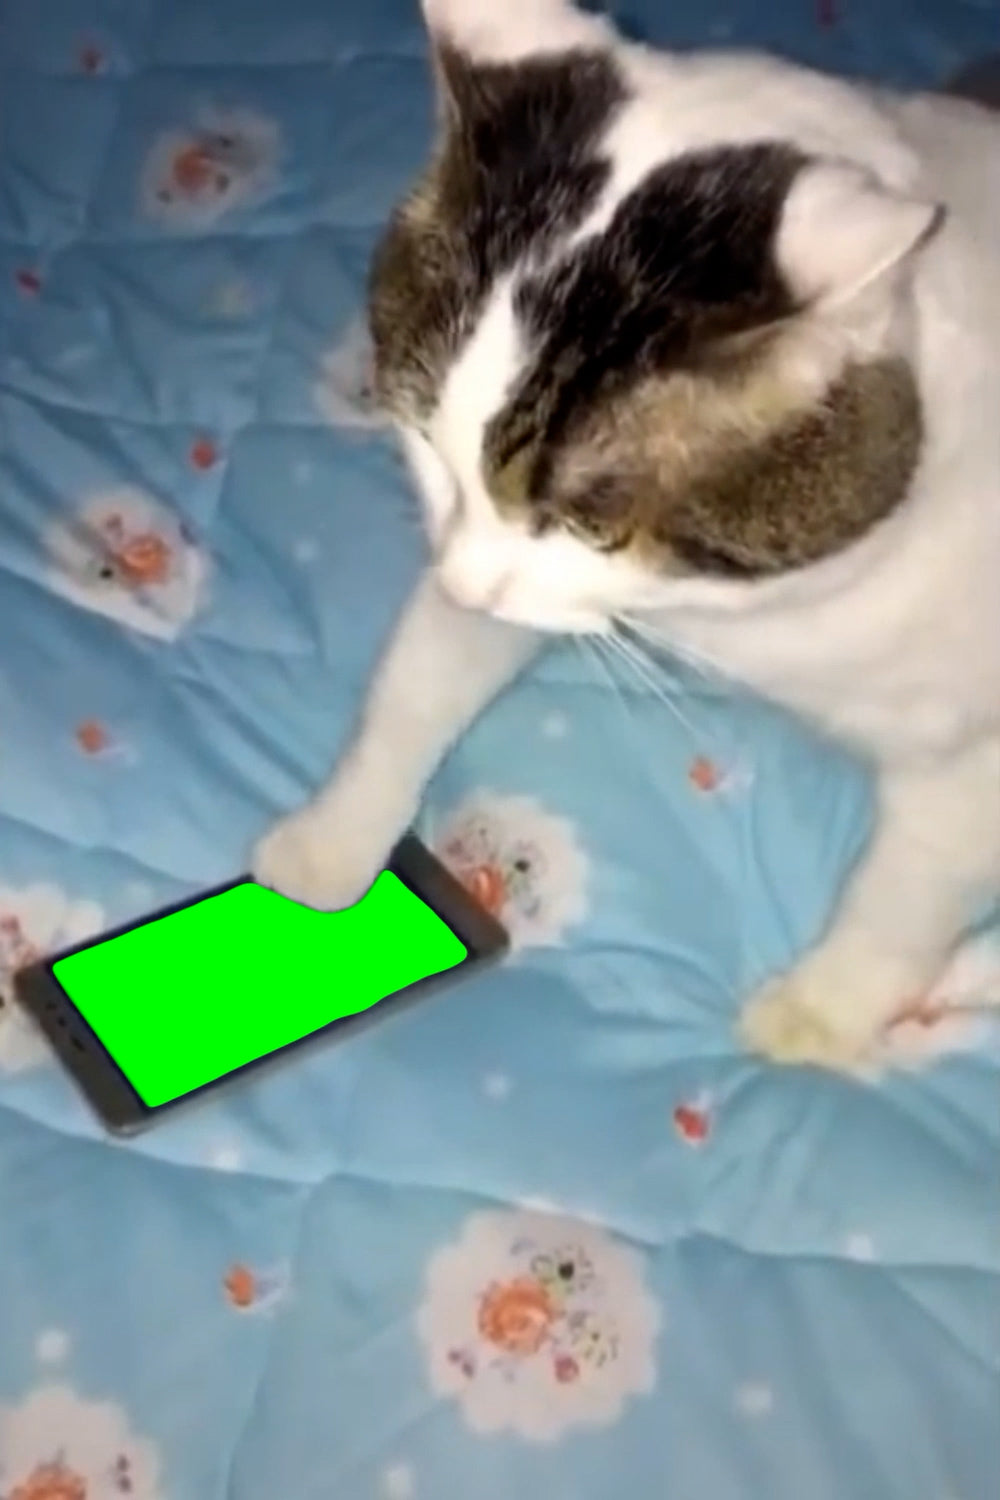 Cat Angry At Phone (Green Screen)